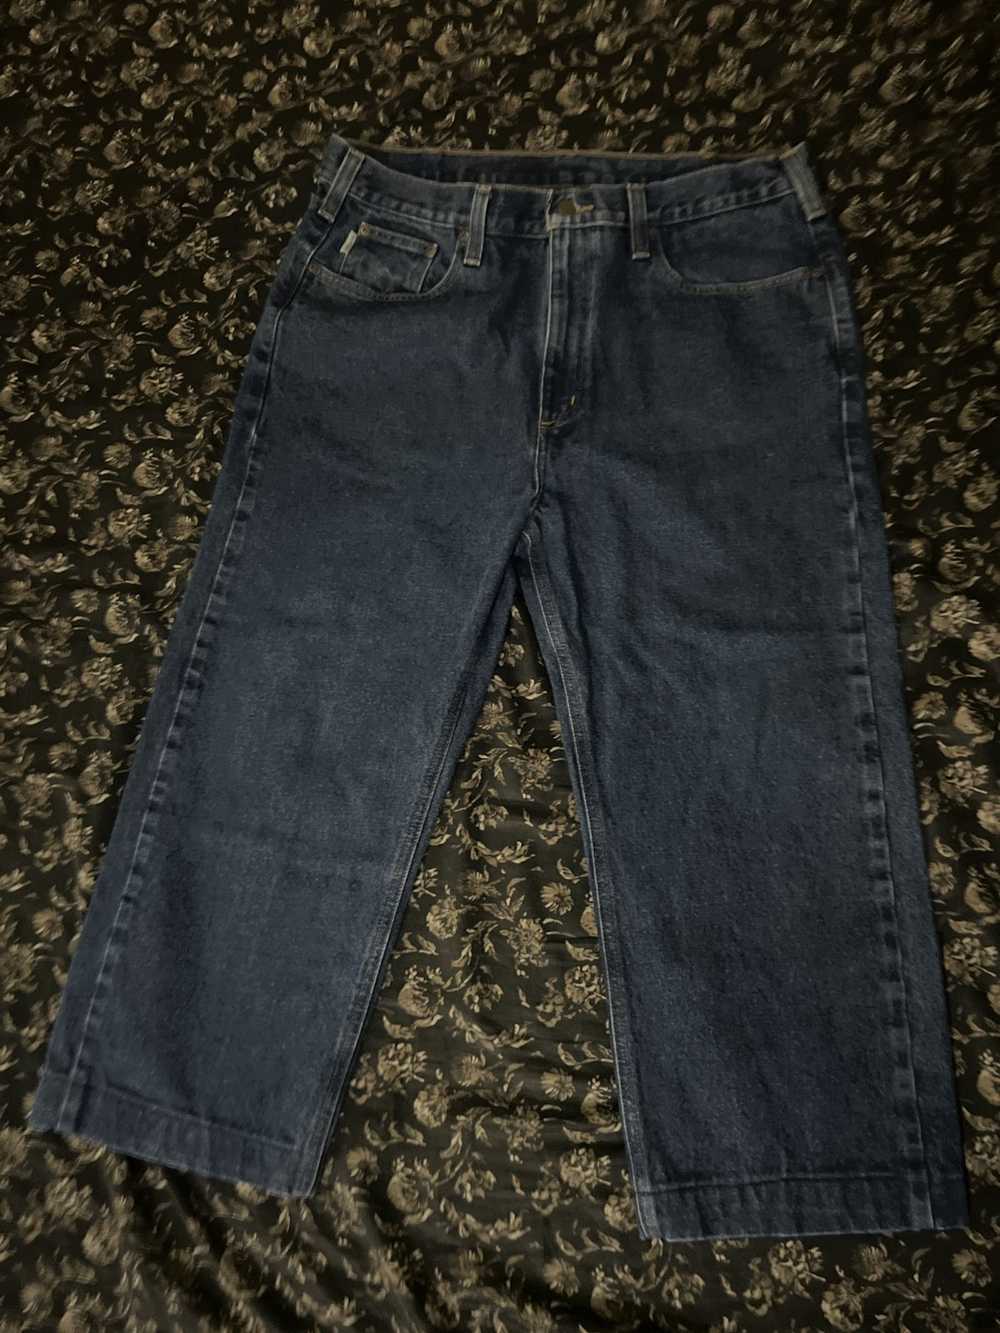 Carhartt OG Carhartt Jeans Traditional Fit - image 3